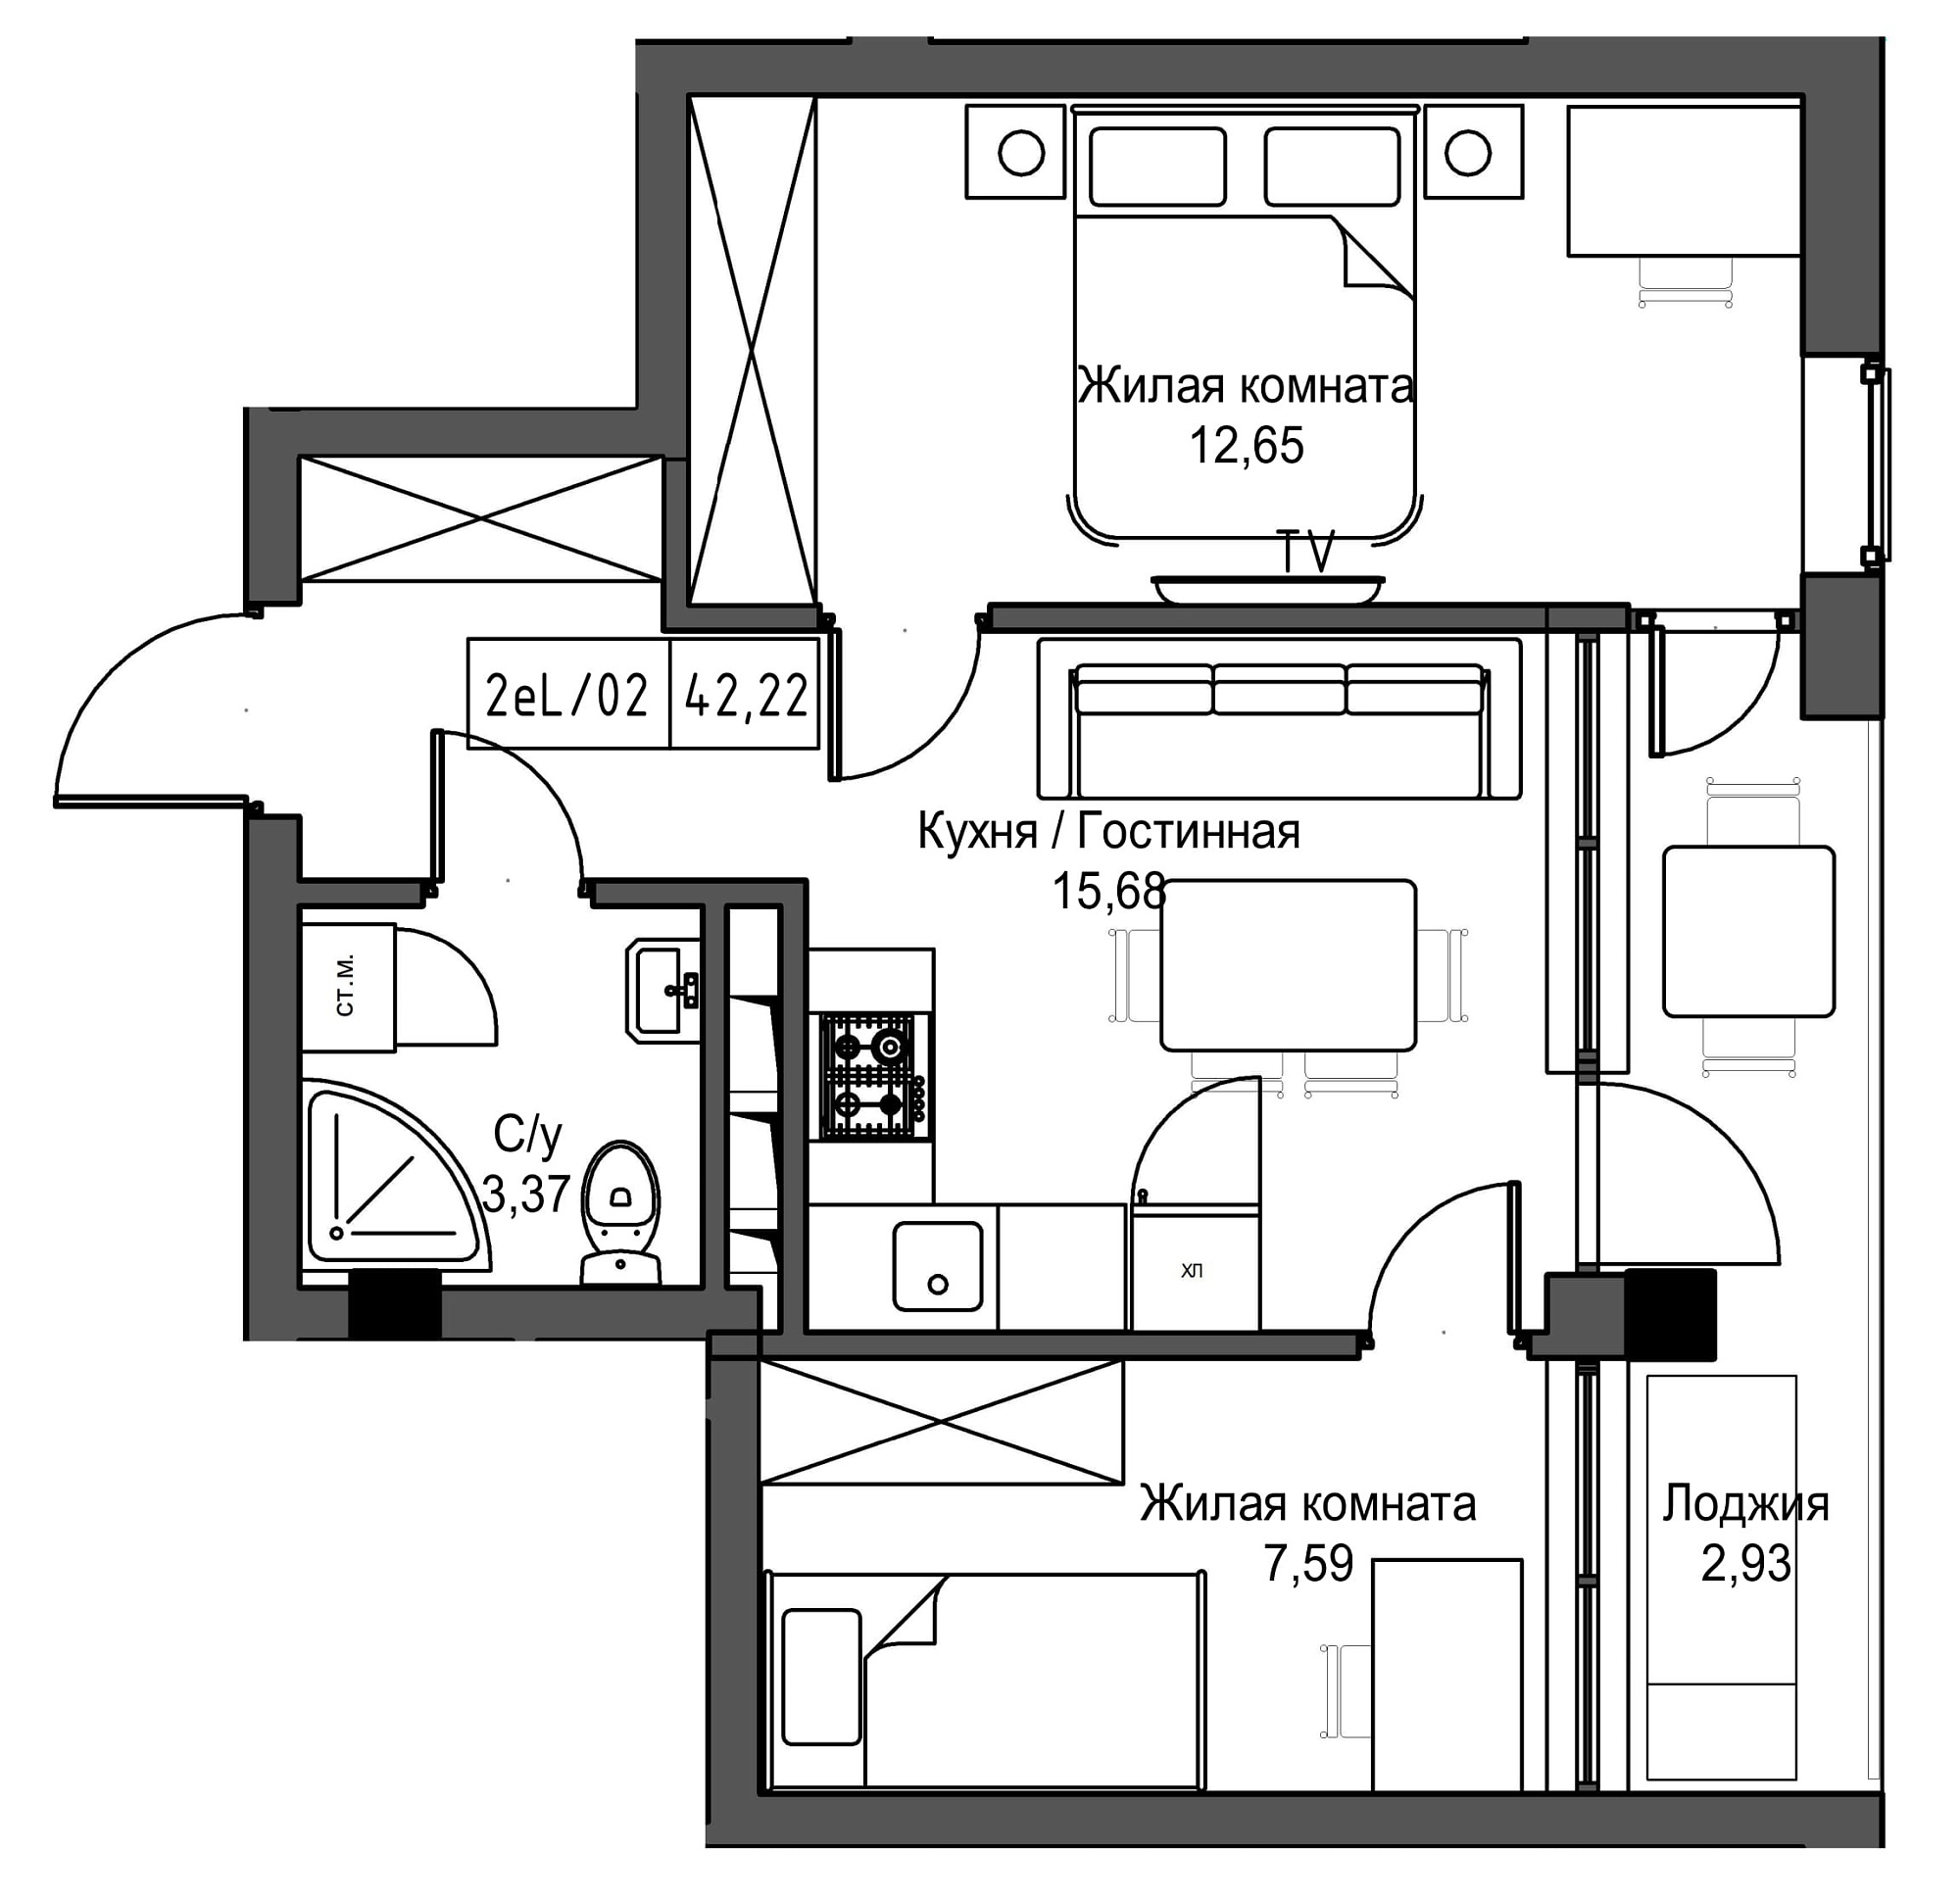 Planning 2-rm flats area 42.22m2, UM-002-08/0072.